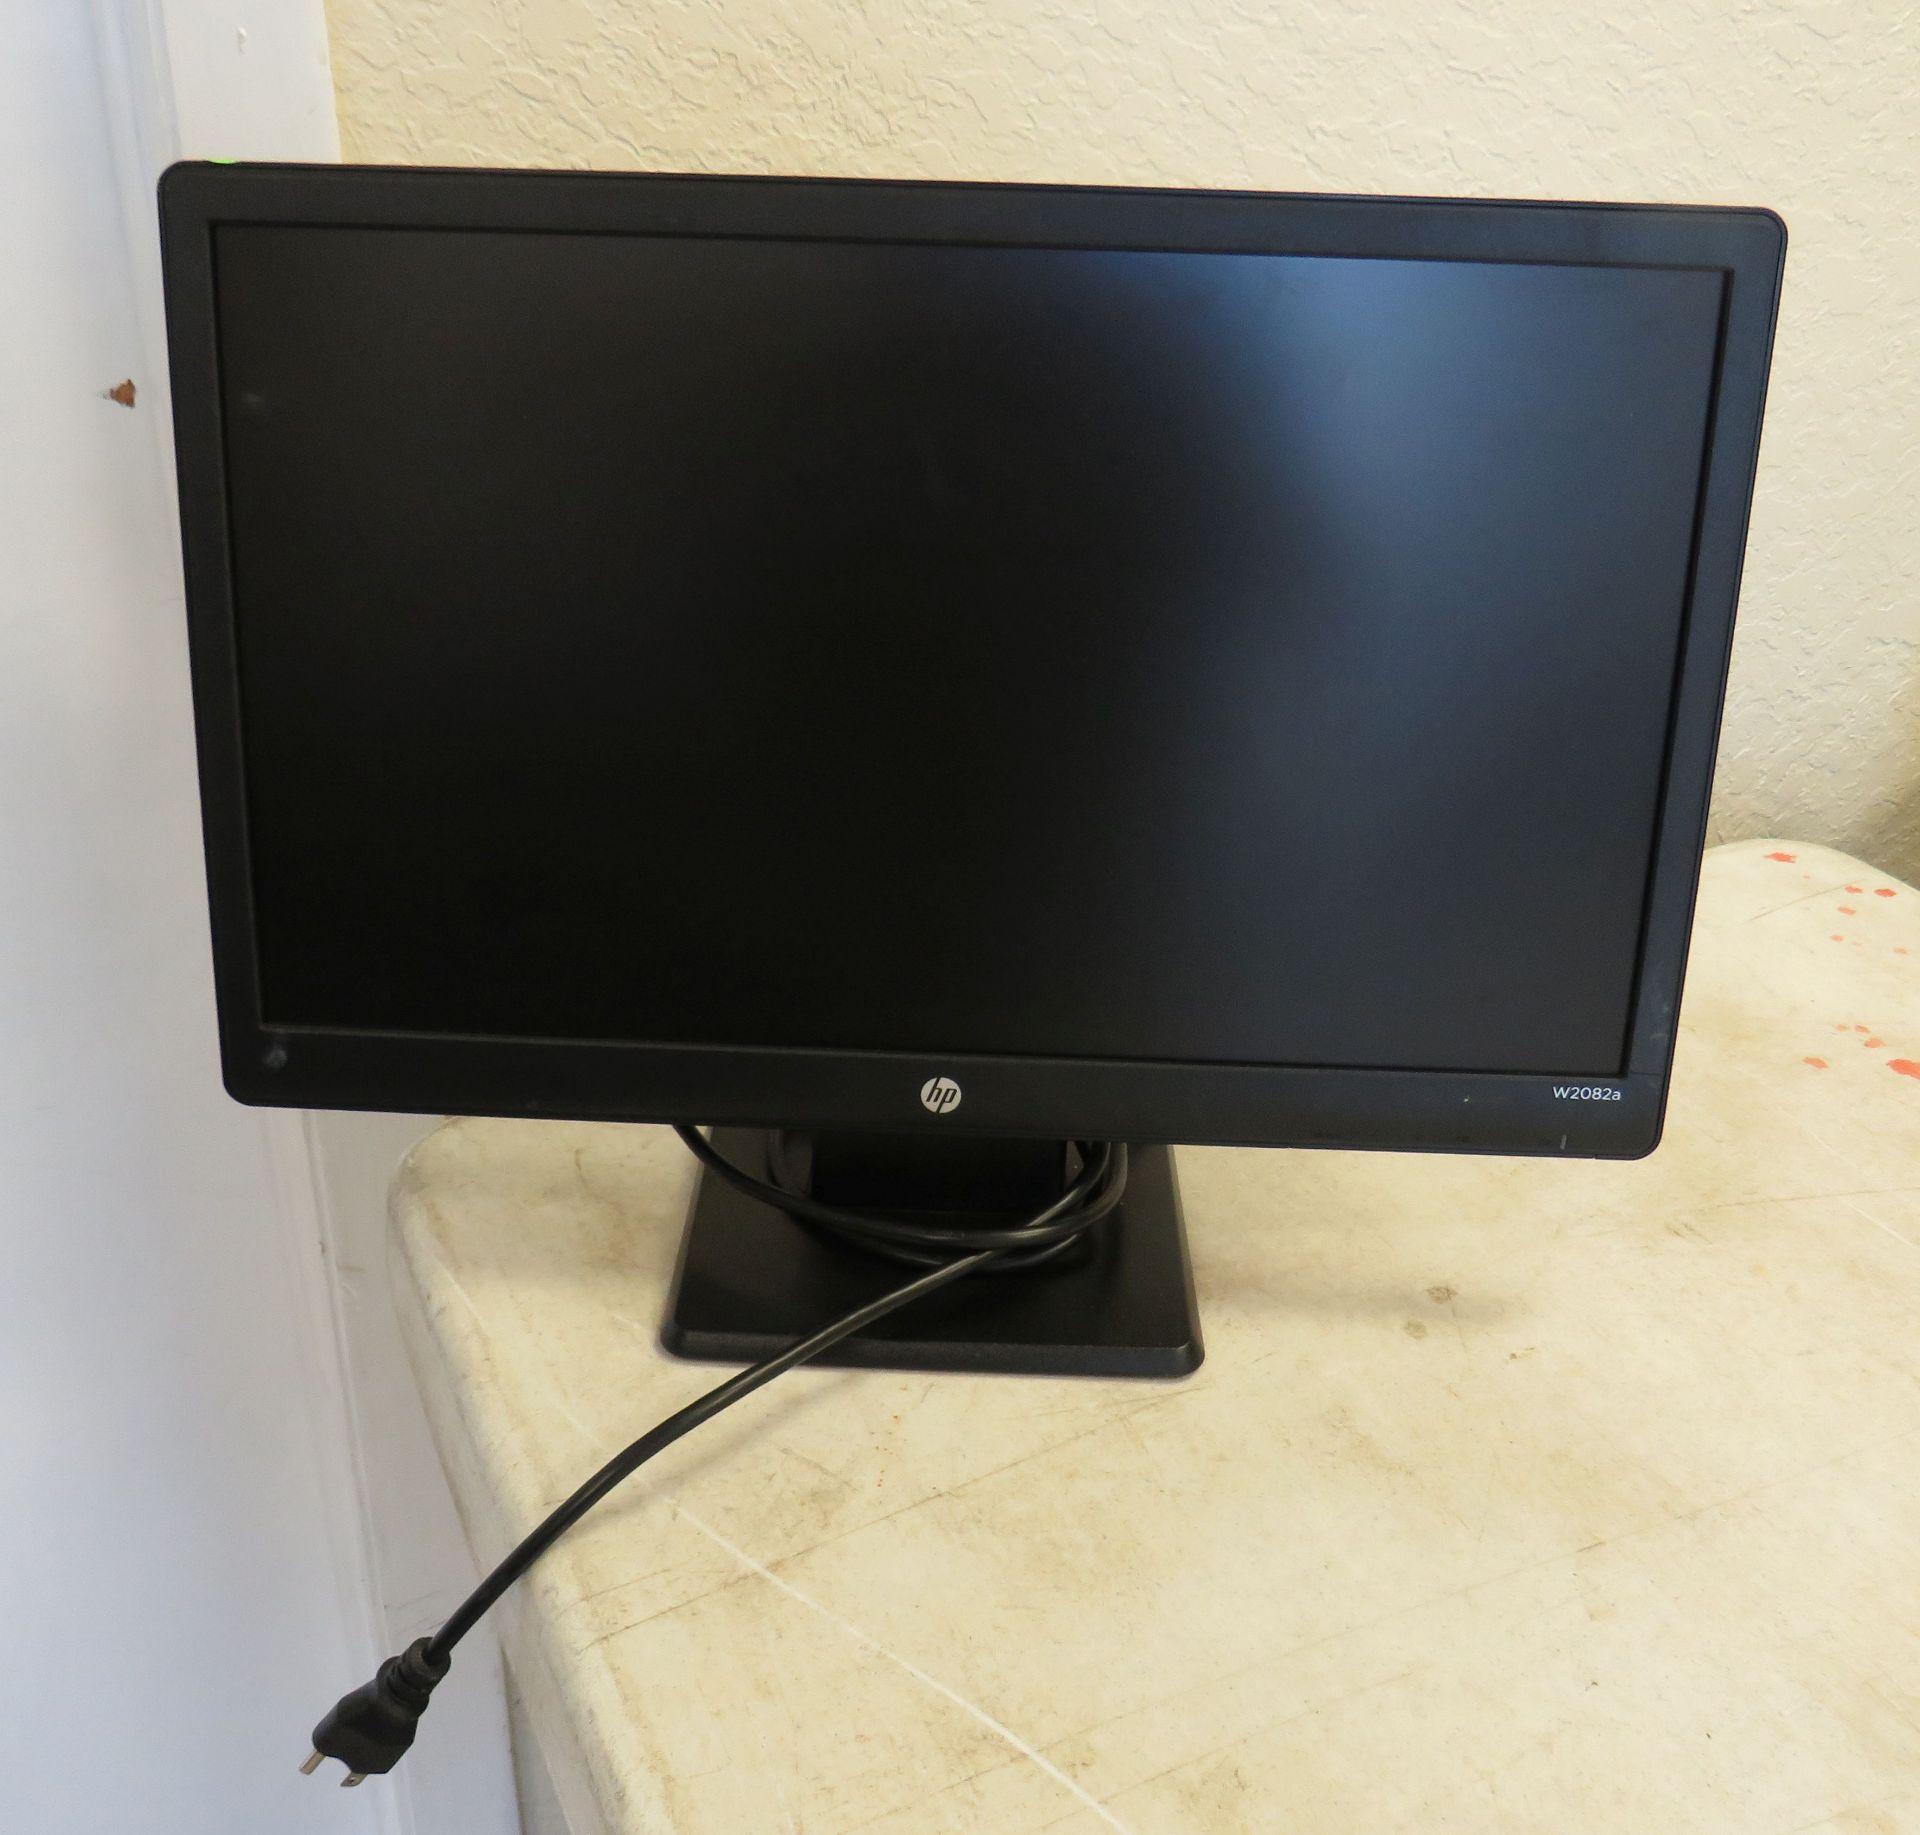 HP model W2082A 20" monitor